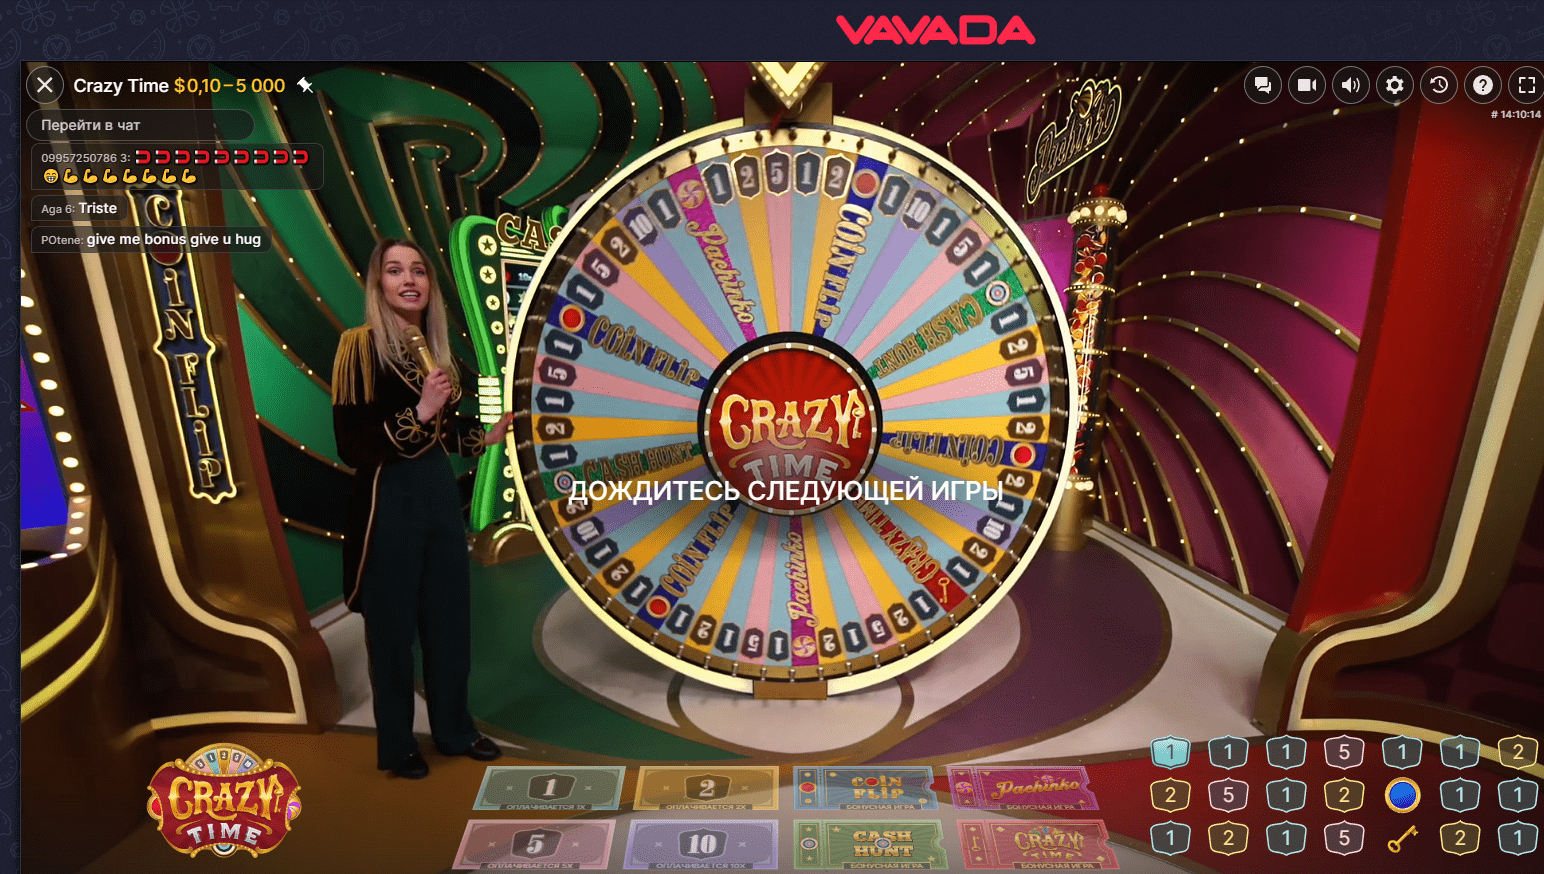 game crazy time at Vavada casino